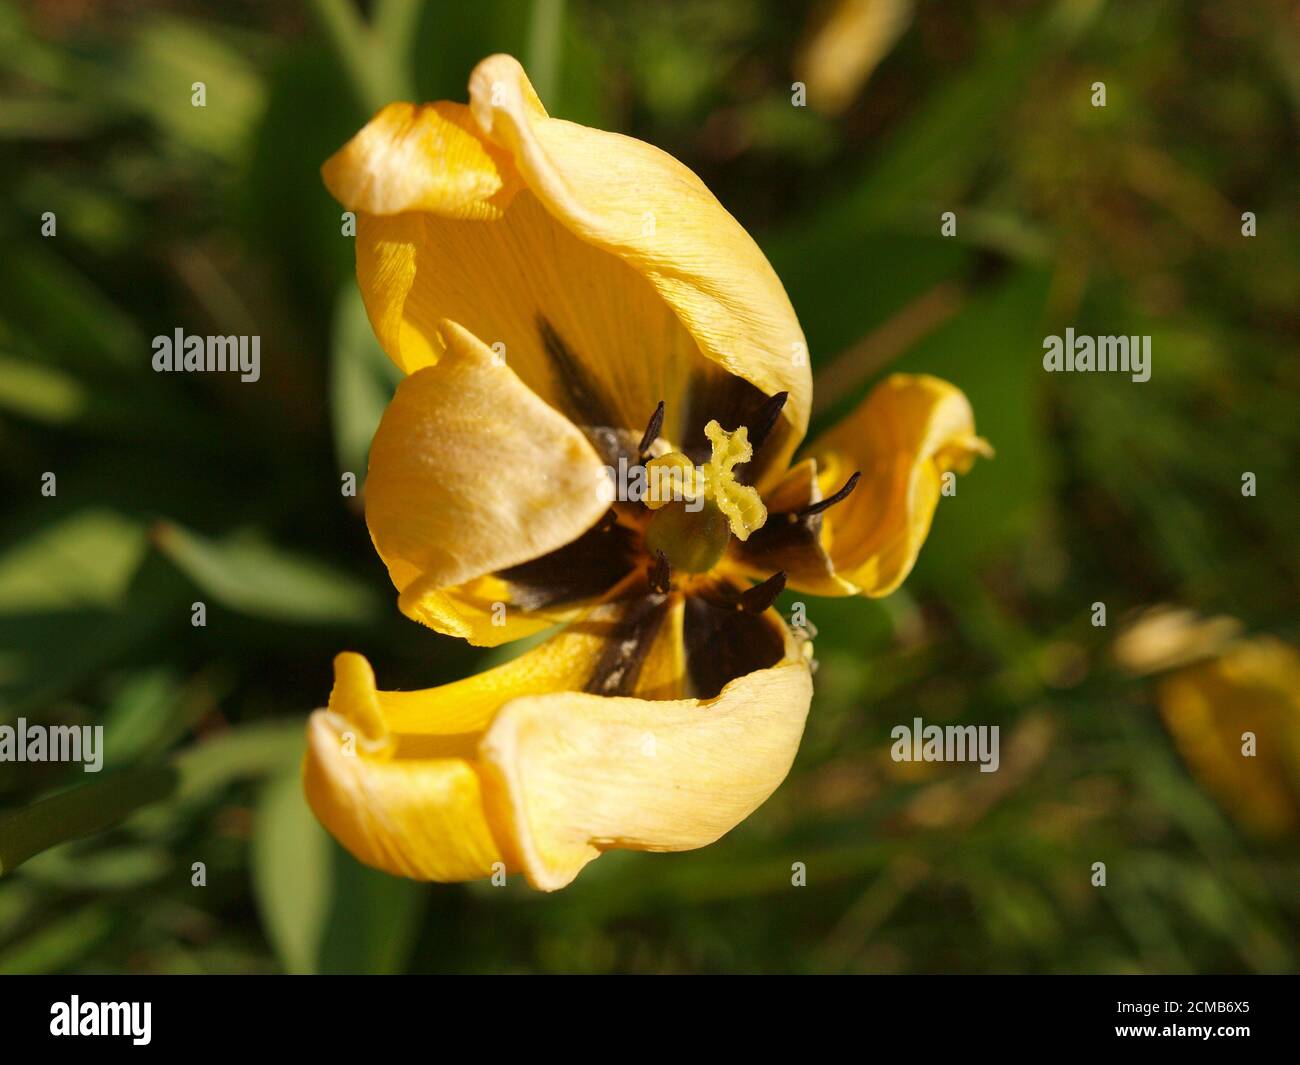 Tulipe jaune arrivant à la fin de sa période de circulation Banque D'Images